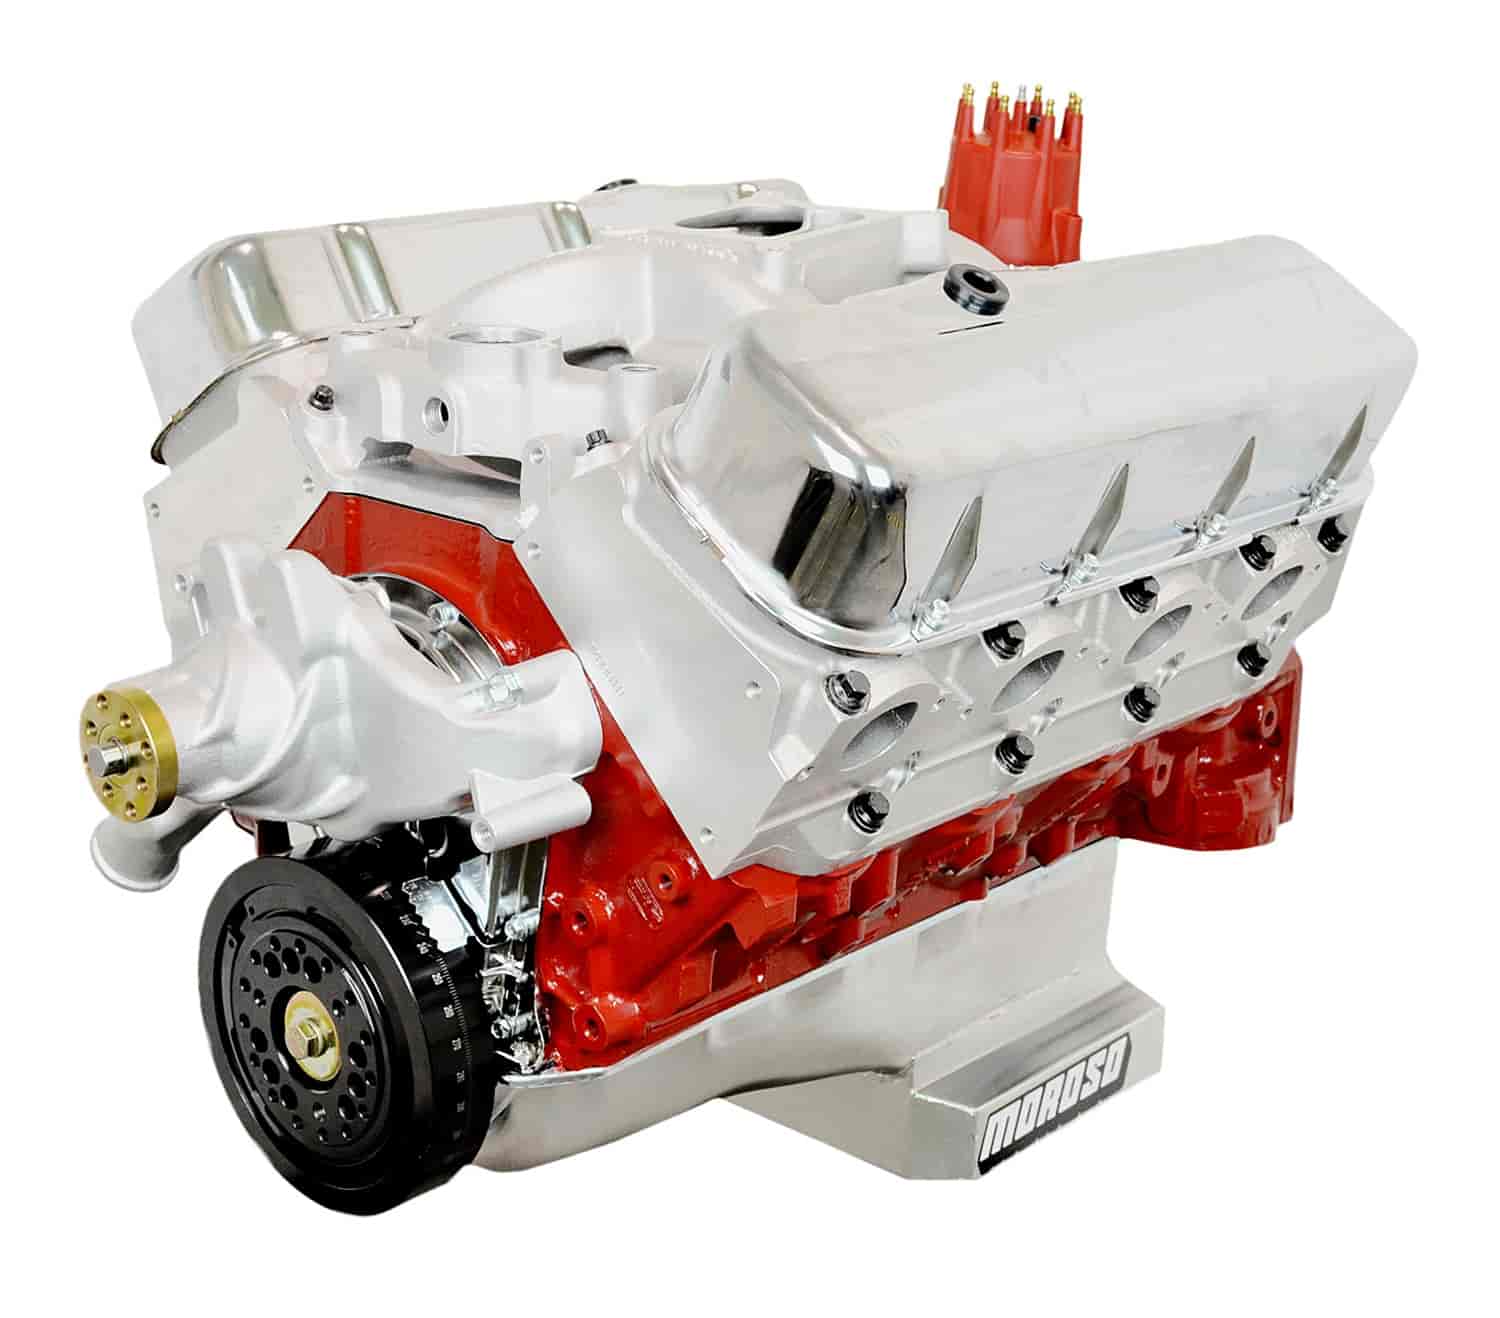 High Performance Crate Engine Big Block Chevy 540ci / 660HP / 650TQ